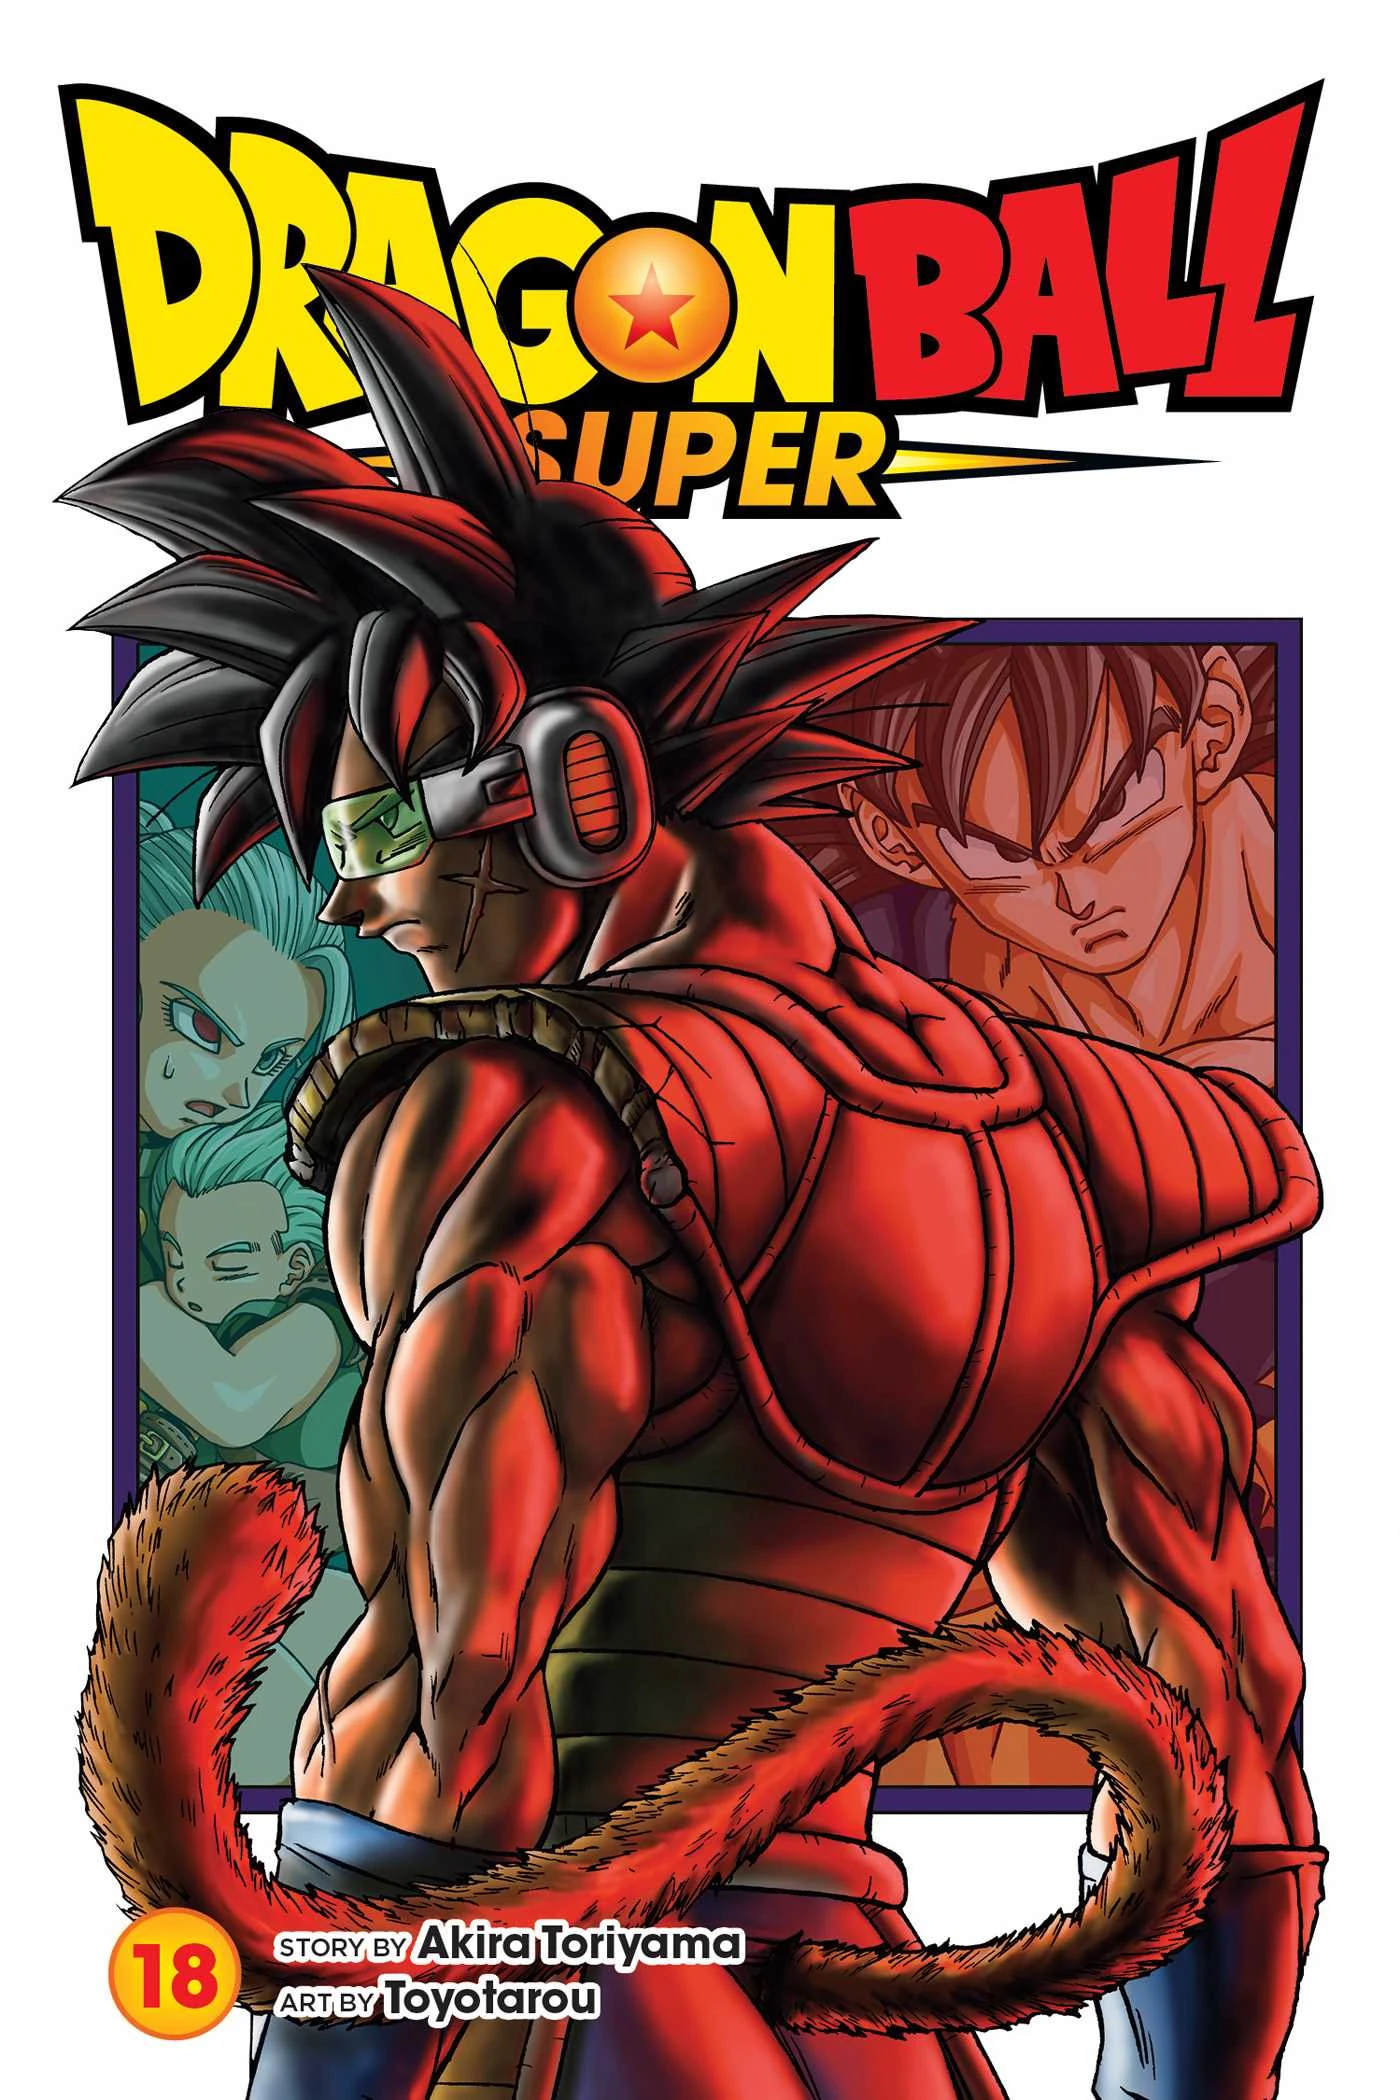 Dragon Ball Super Manga 93 RESUMEN COMPLETO, Goku vs Vegeta